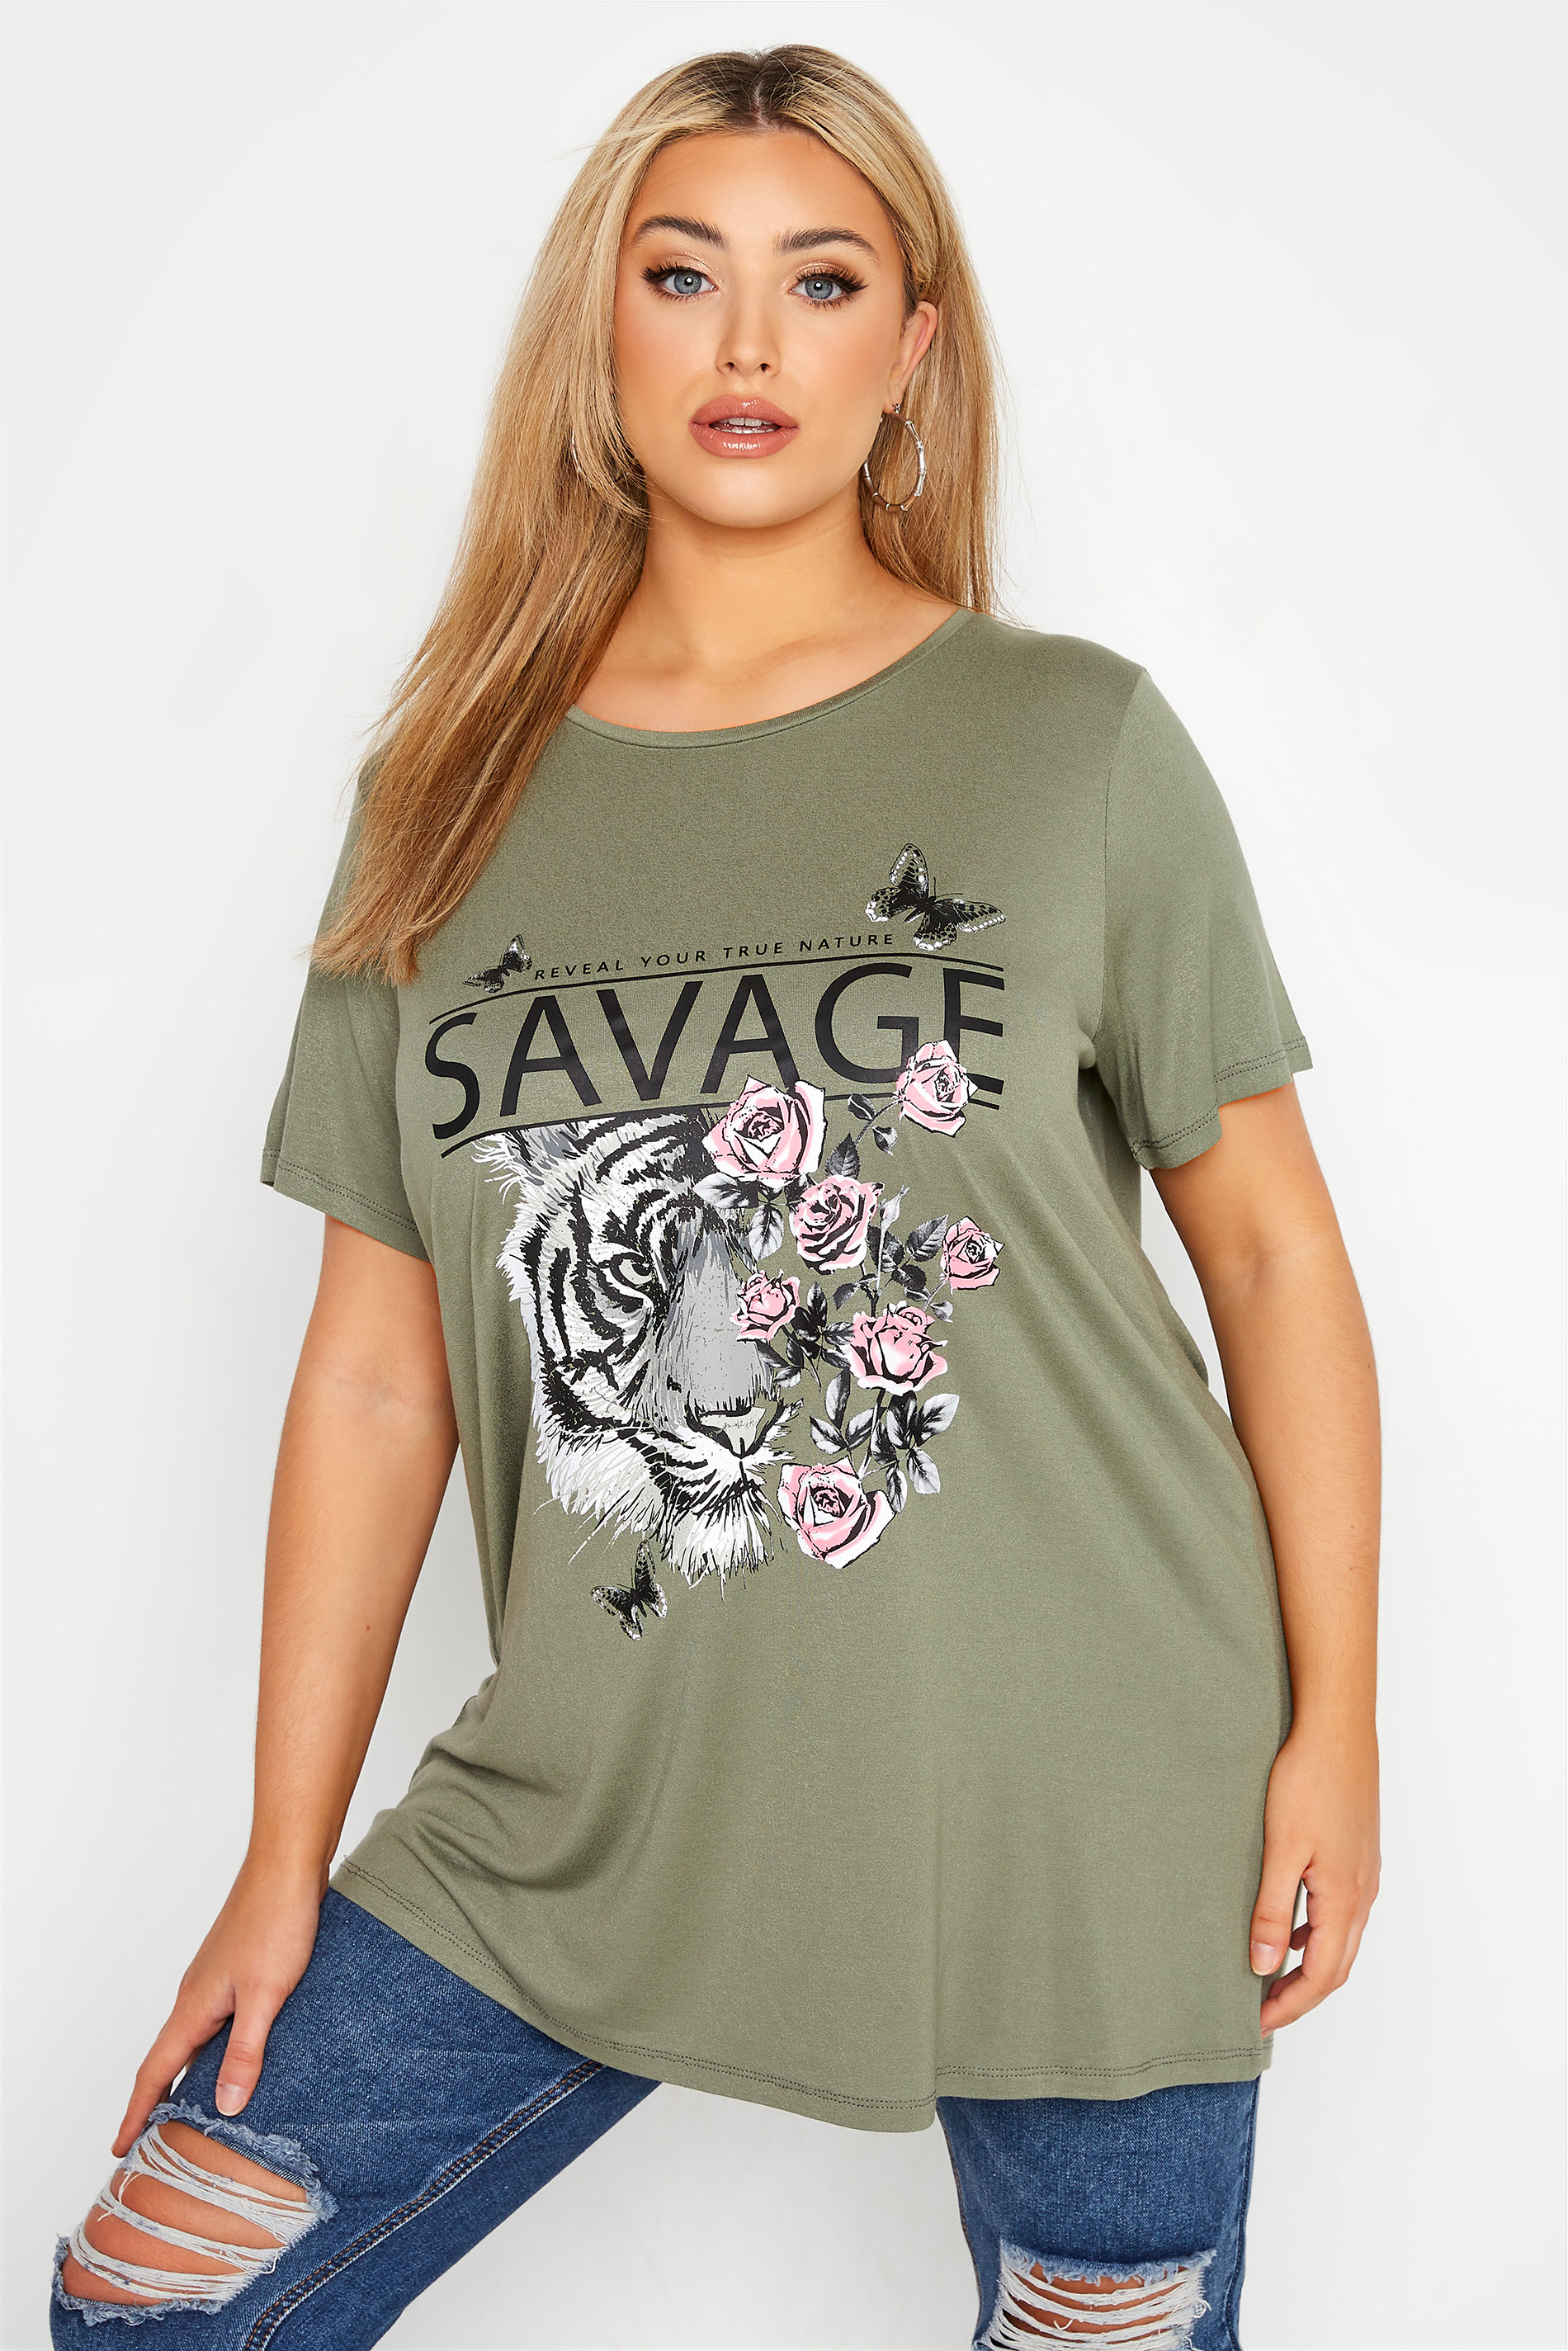 Grande taille  Tops Grande taille  T-Shirts | T-Shirt Vert Kaki Tigre Slogan 'Savage' - DK70983